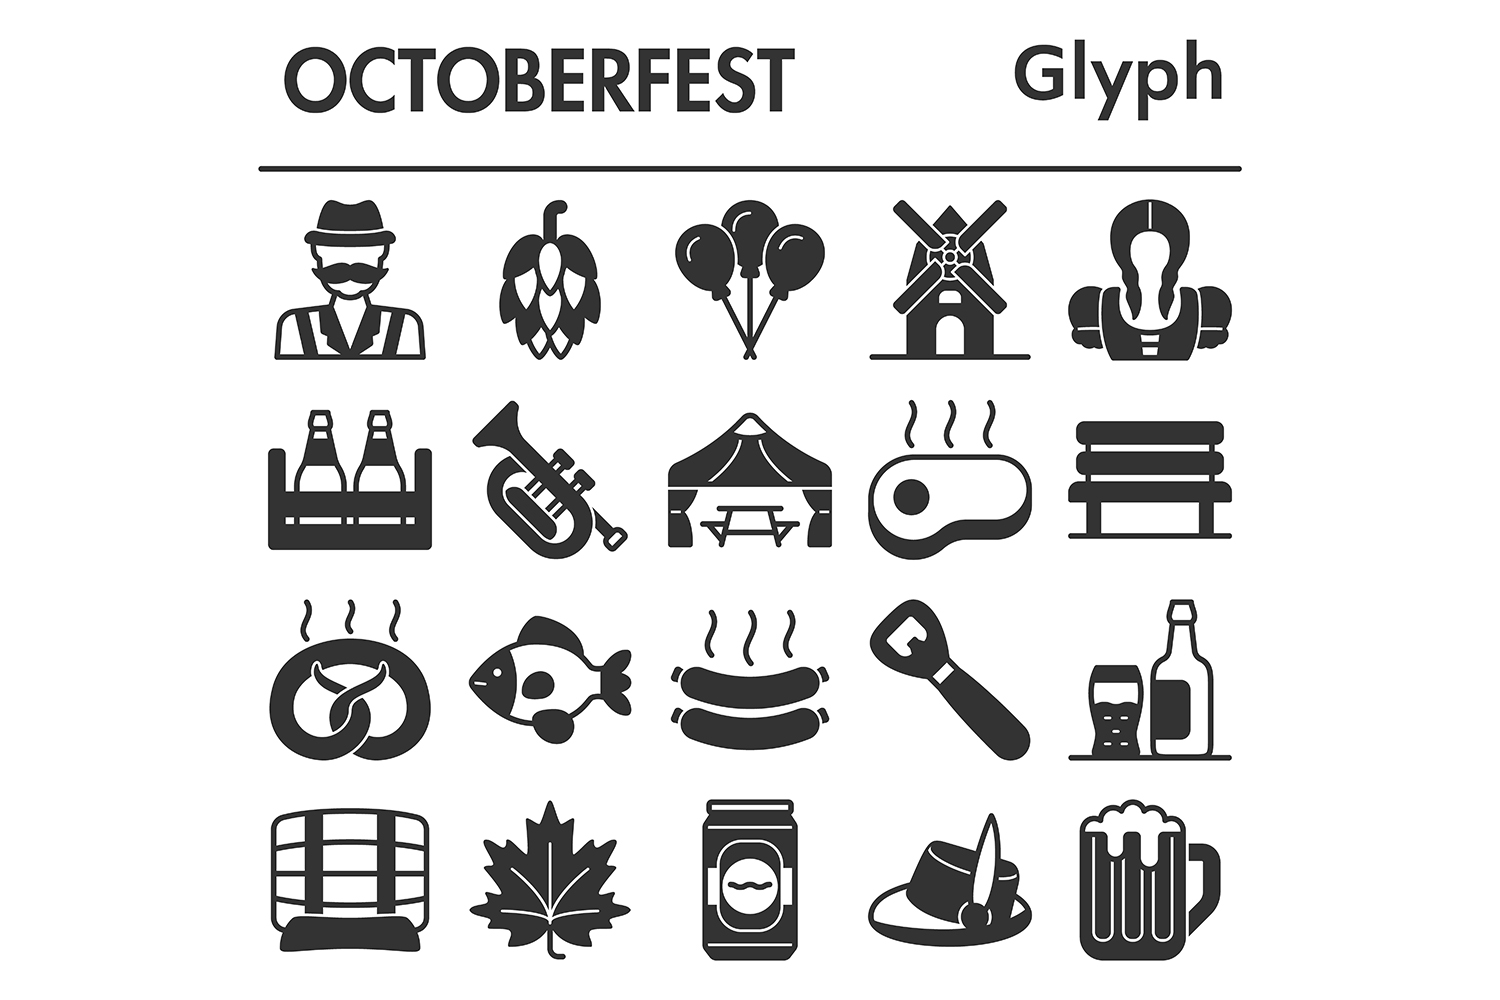 Oktoberfest icons set, glyph style pinterest preview image.